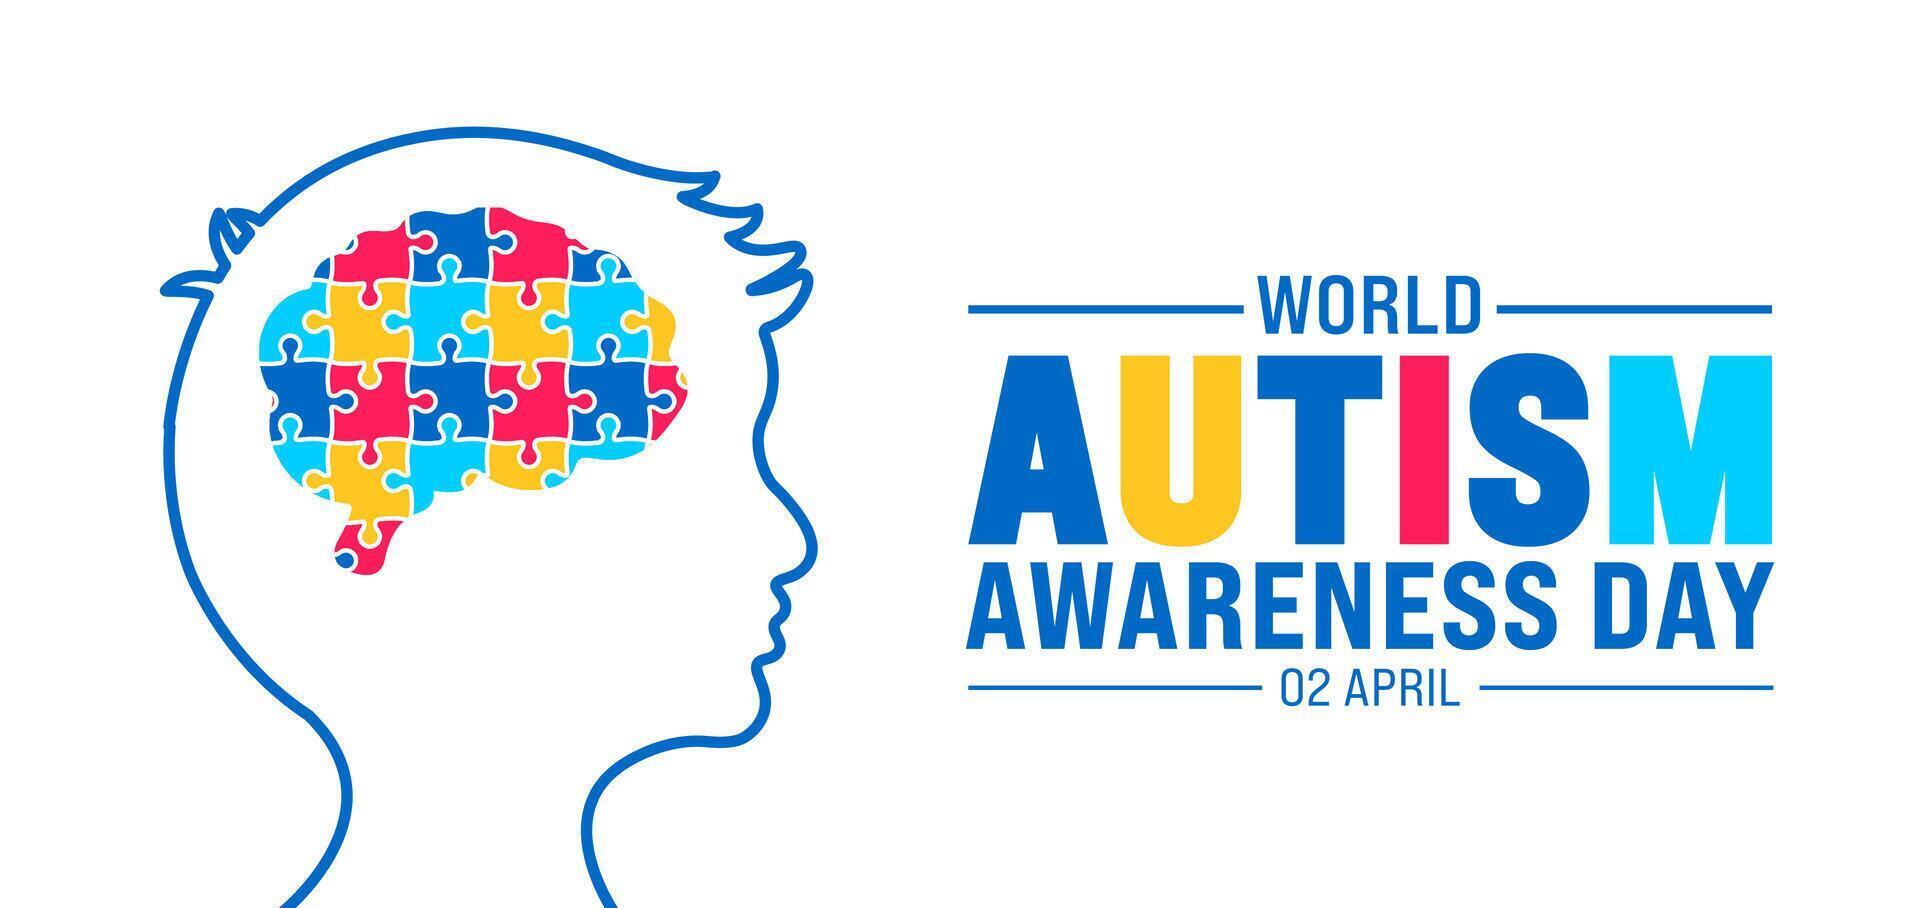 2 April Welt Autismus Bewusstsein Tag Junge Kind Kopf mit bunt Puzzle Gehirn Banner Design Vorlage. Vektor Illustration.